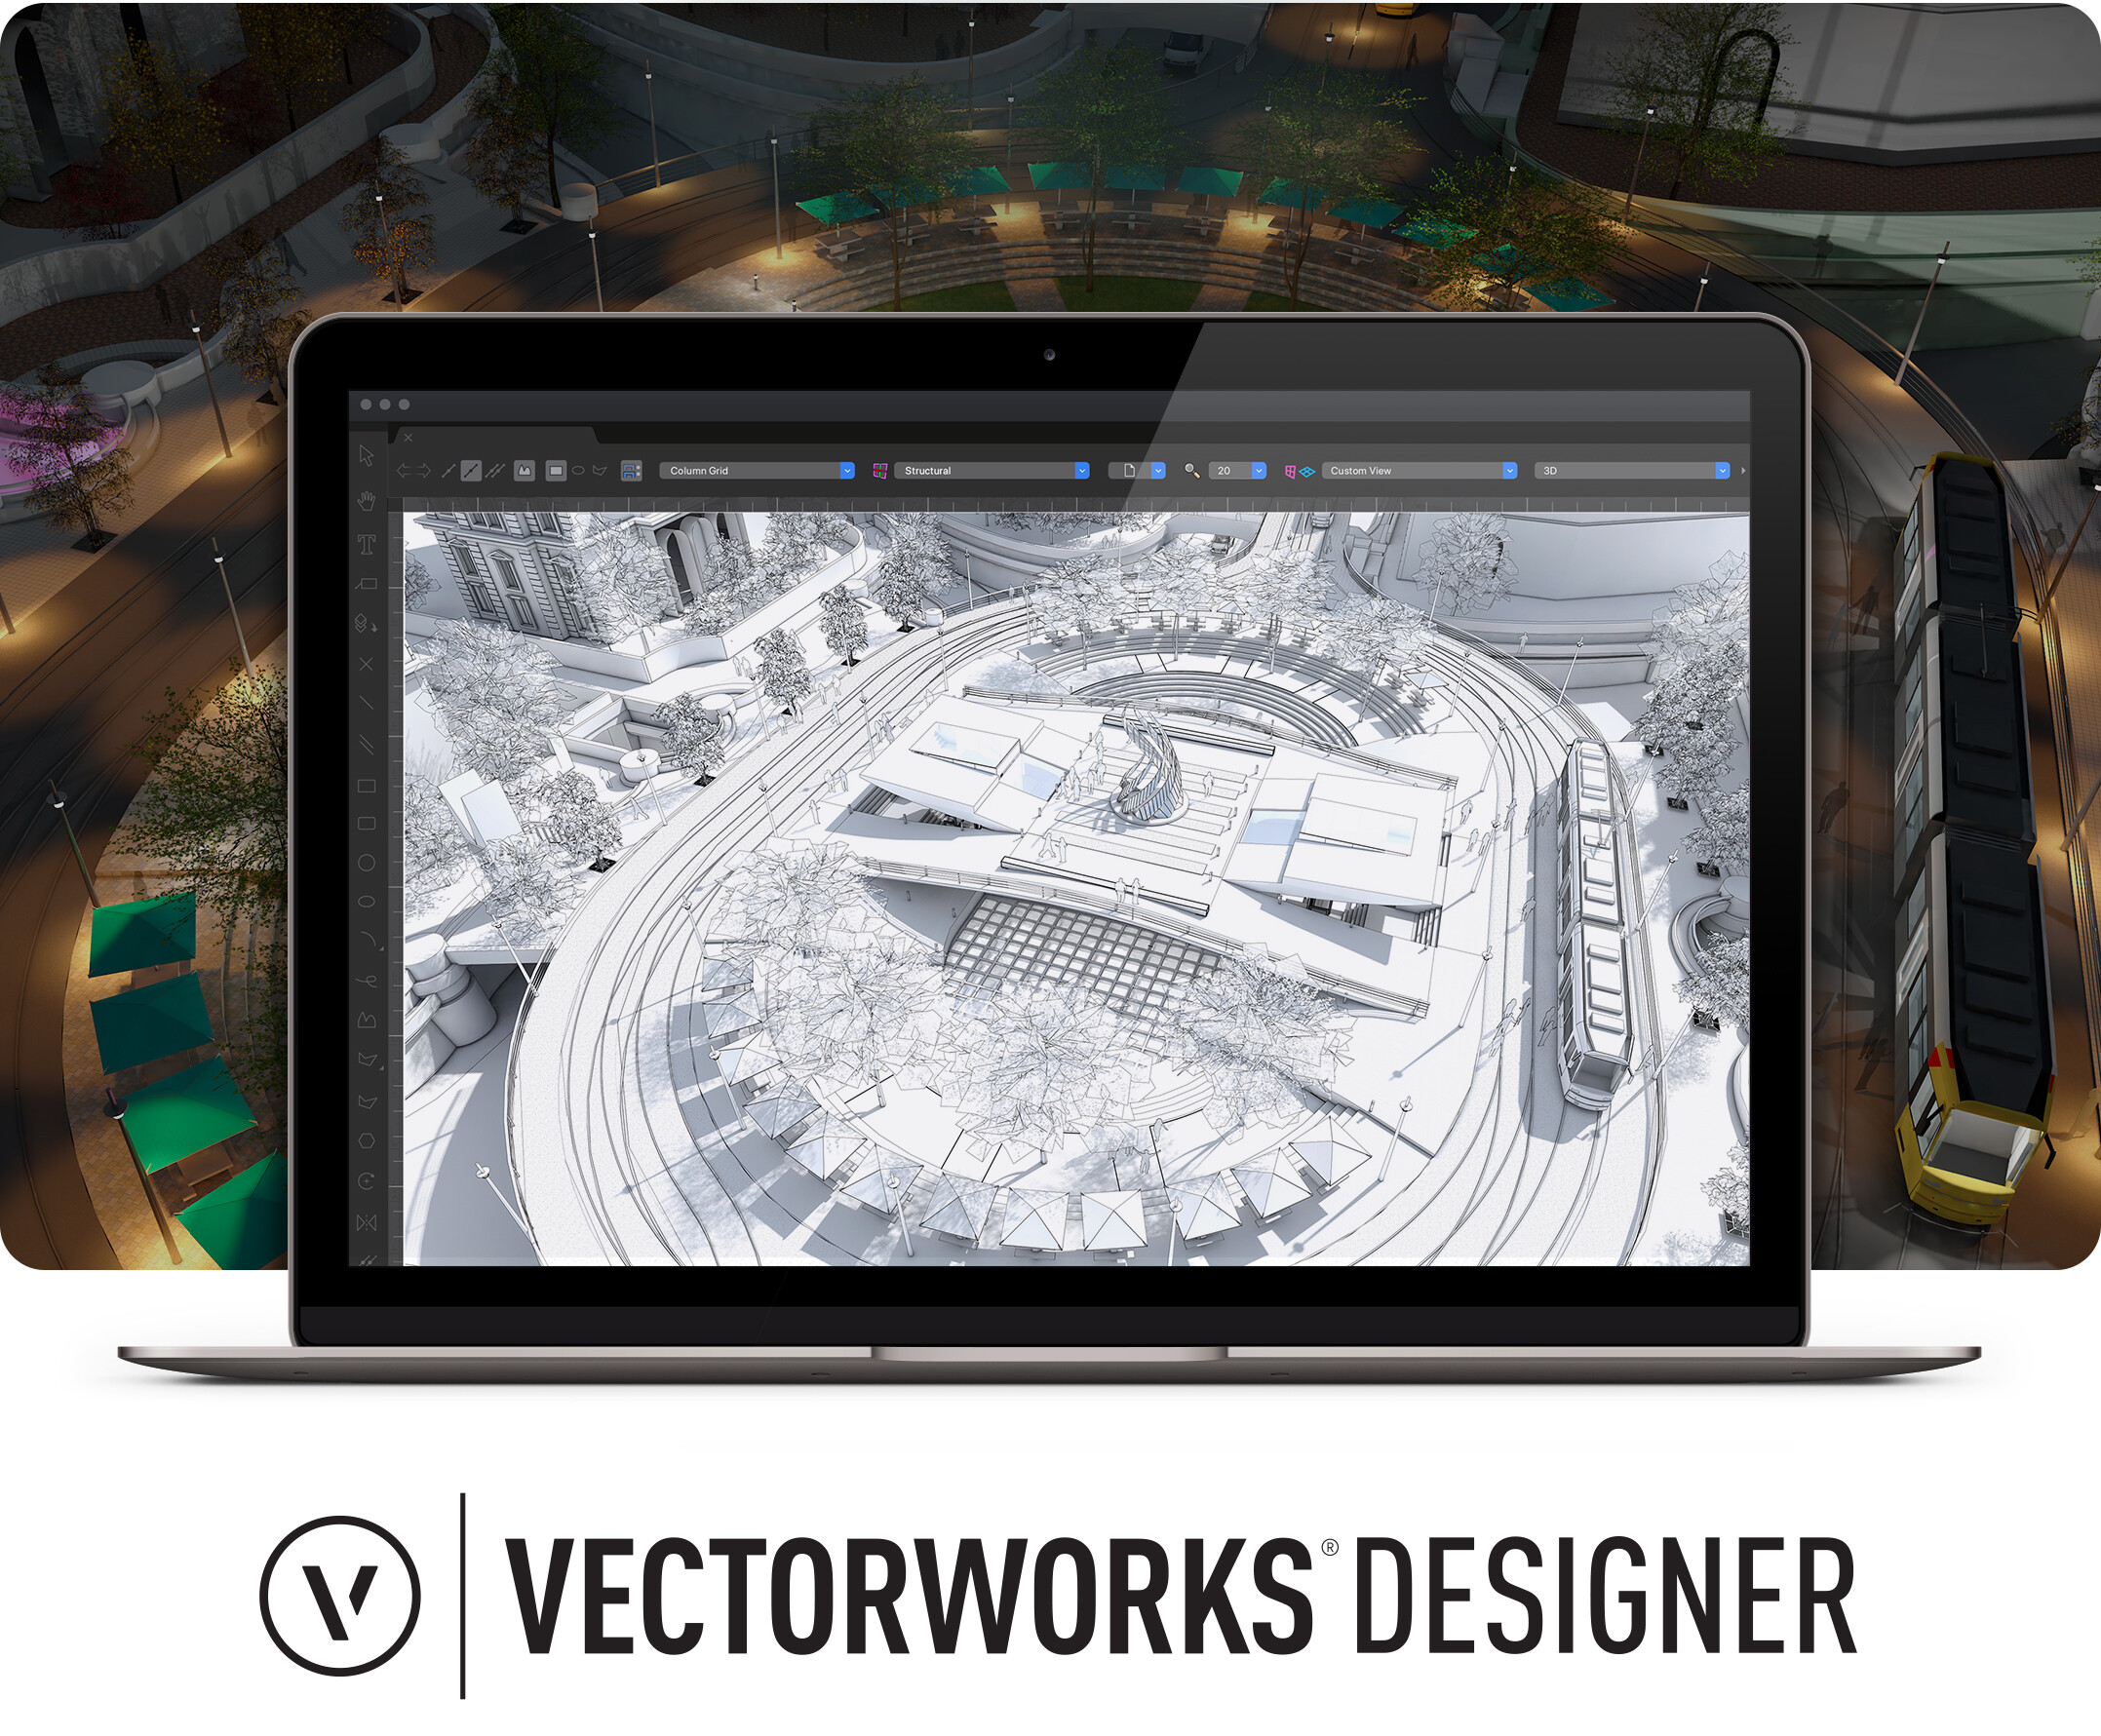 vectorworks support